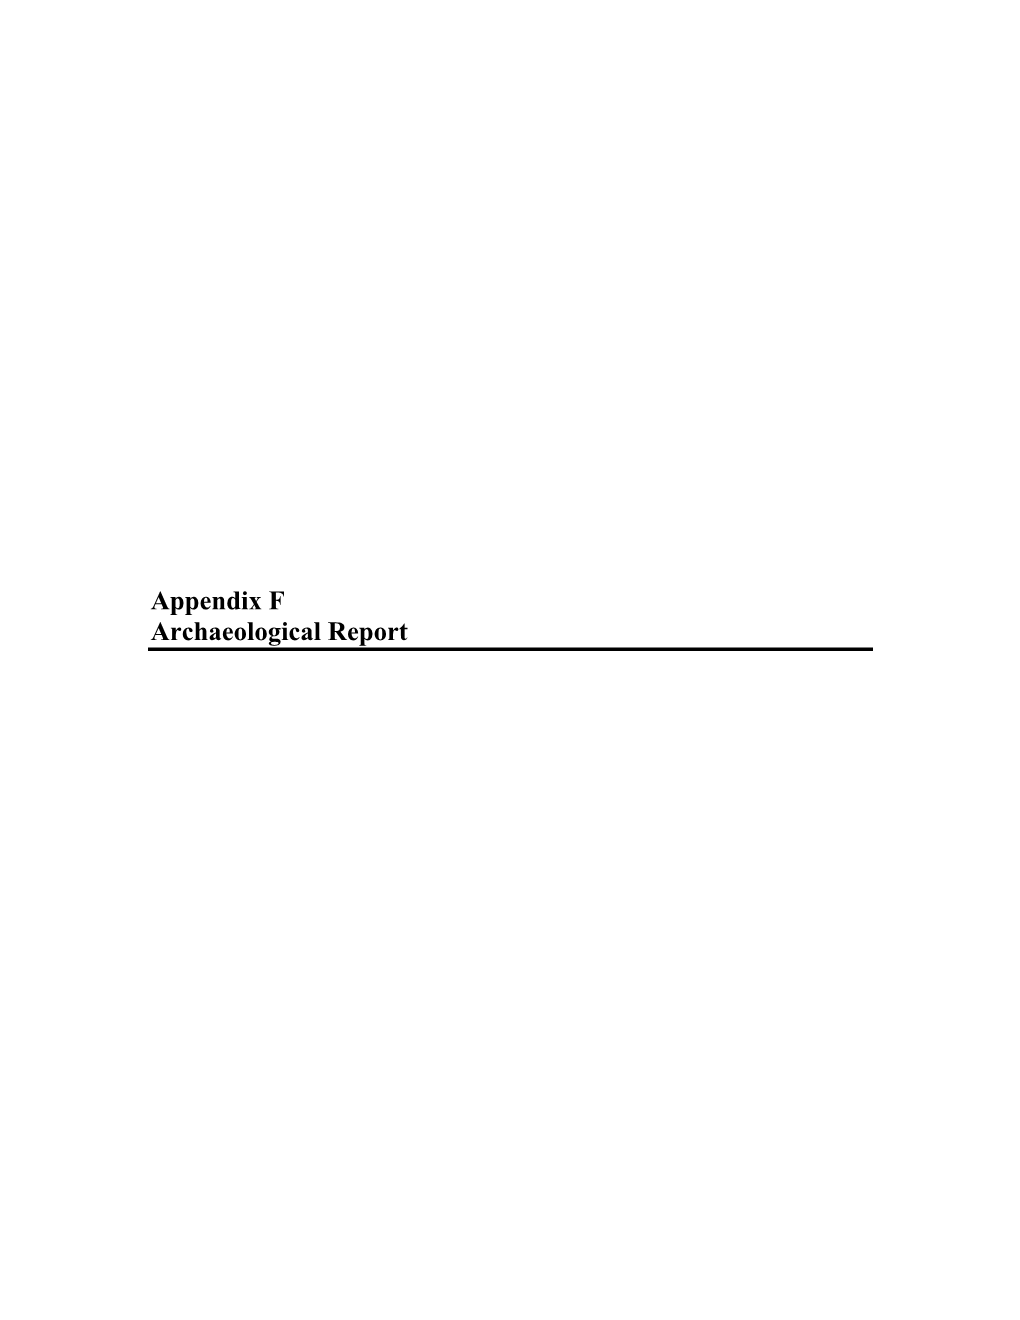 Appendix F Archaeological Report